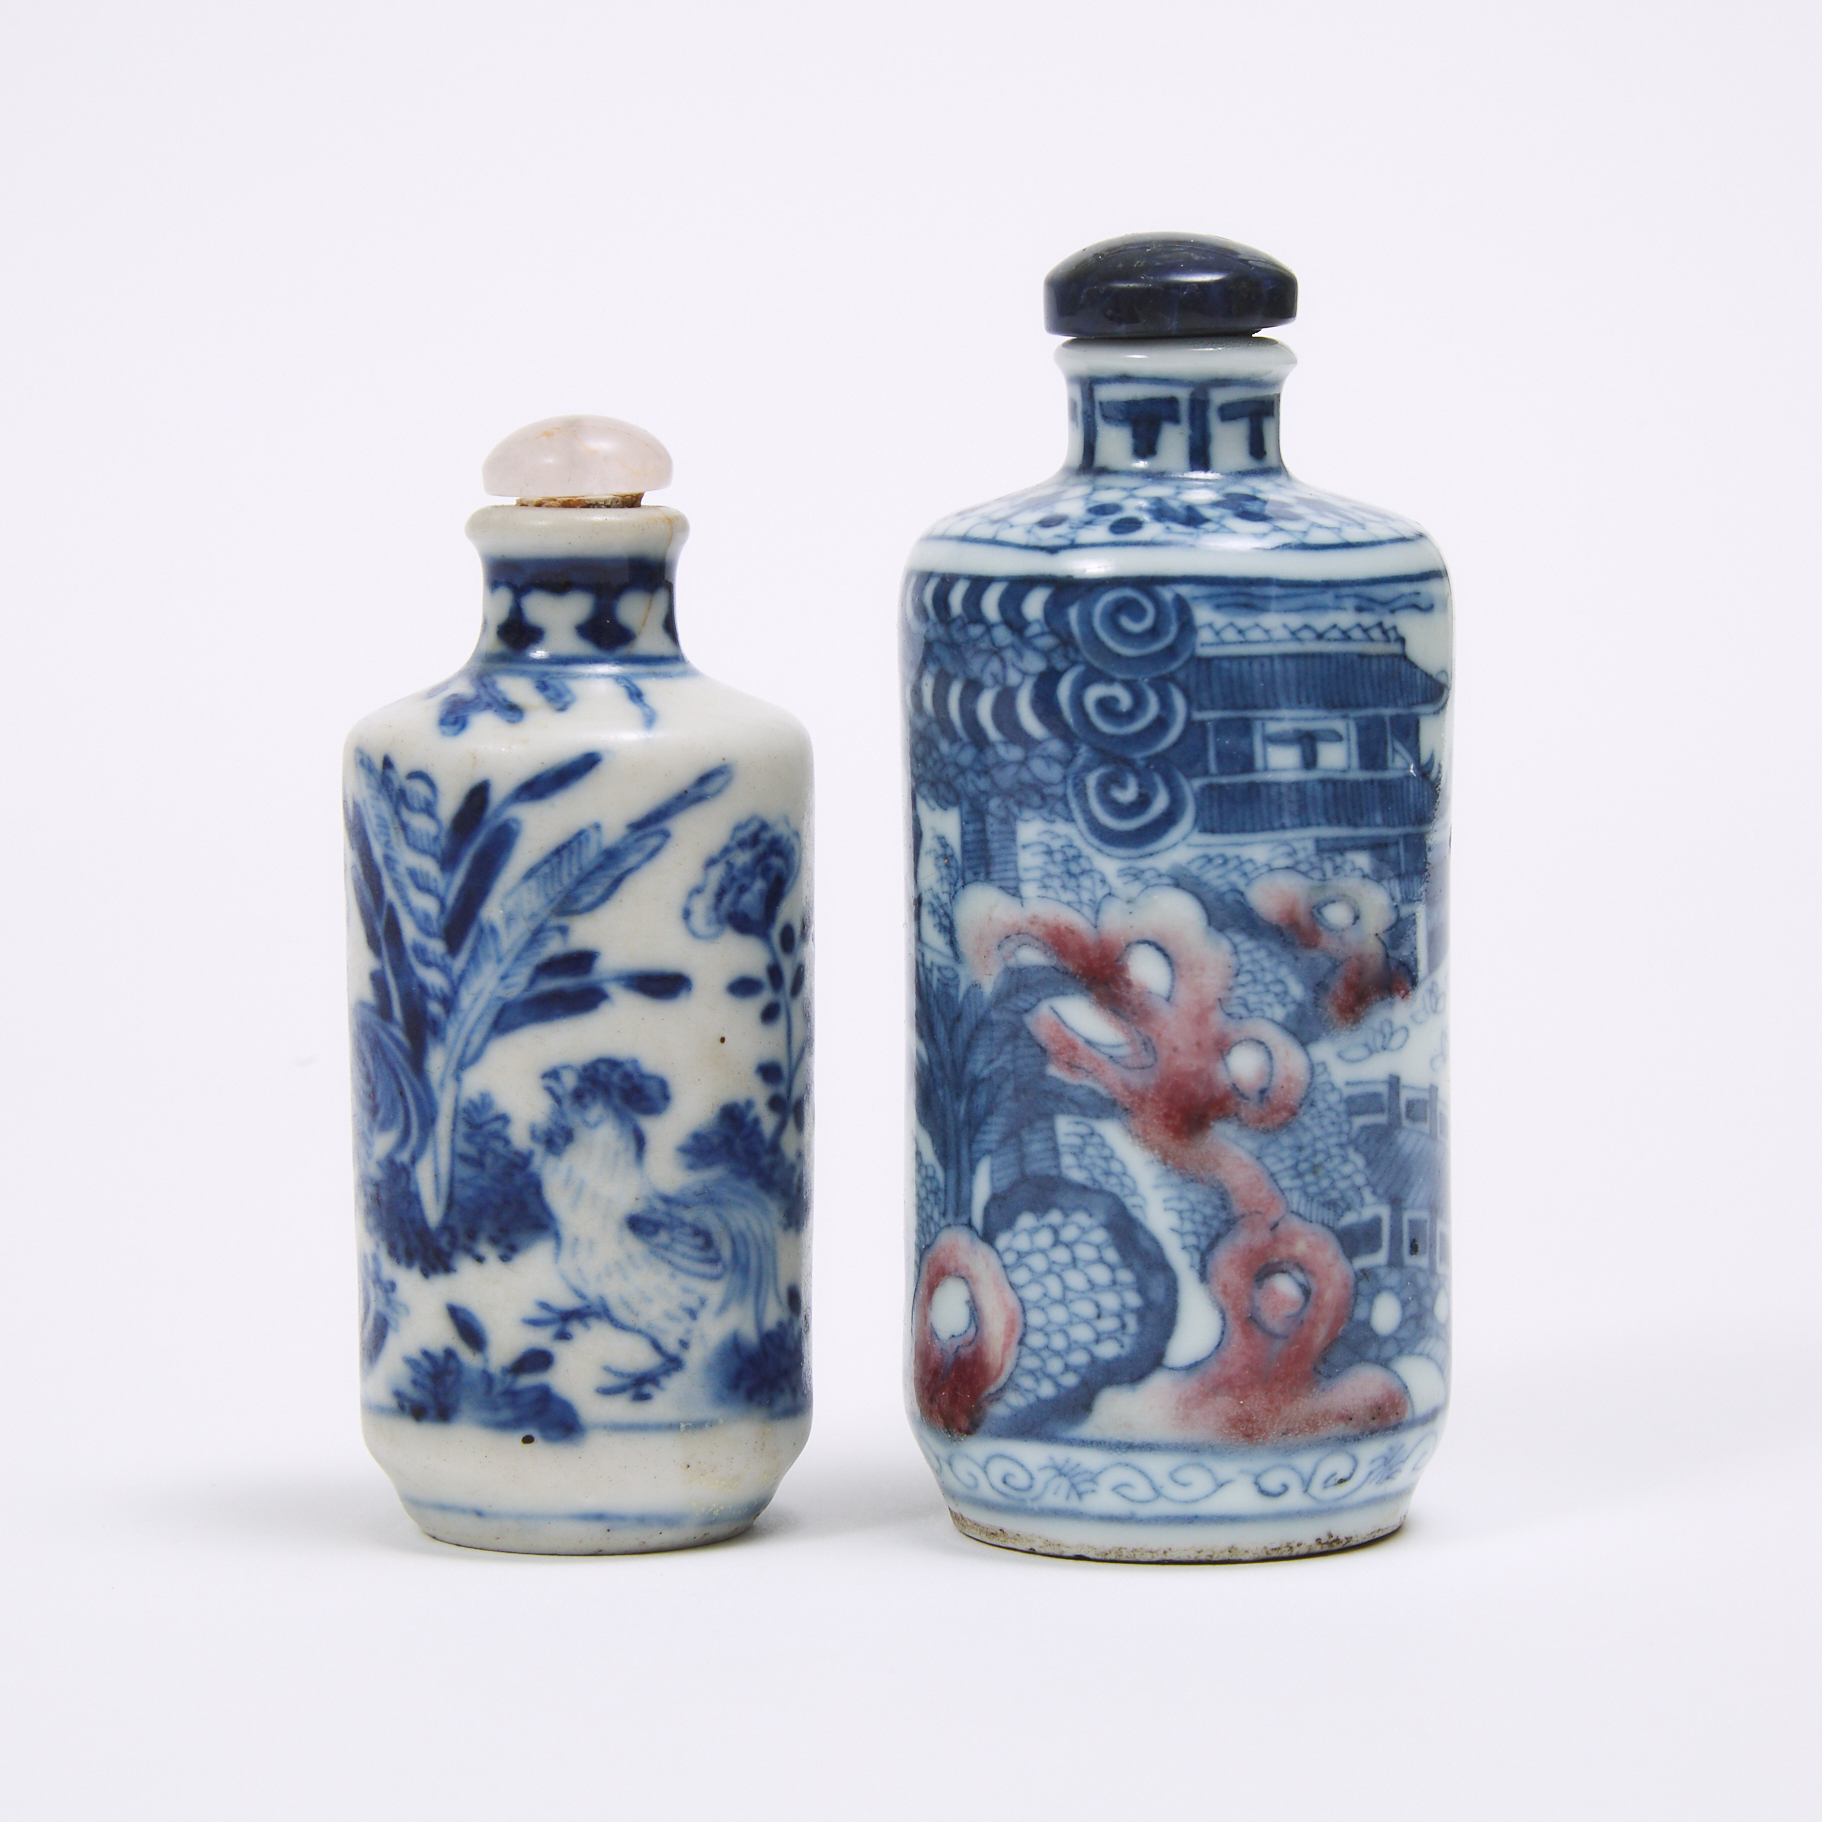 Two Underglaze Porcelain Snuff Bottles, 19th Century